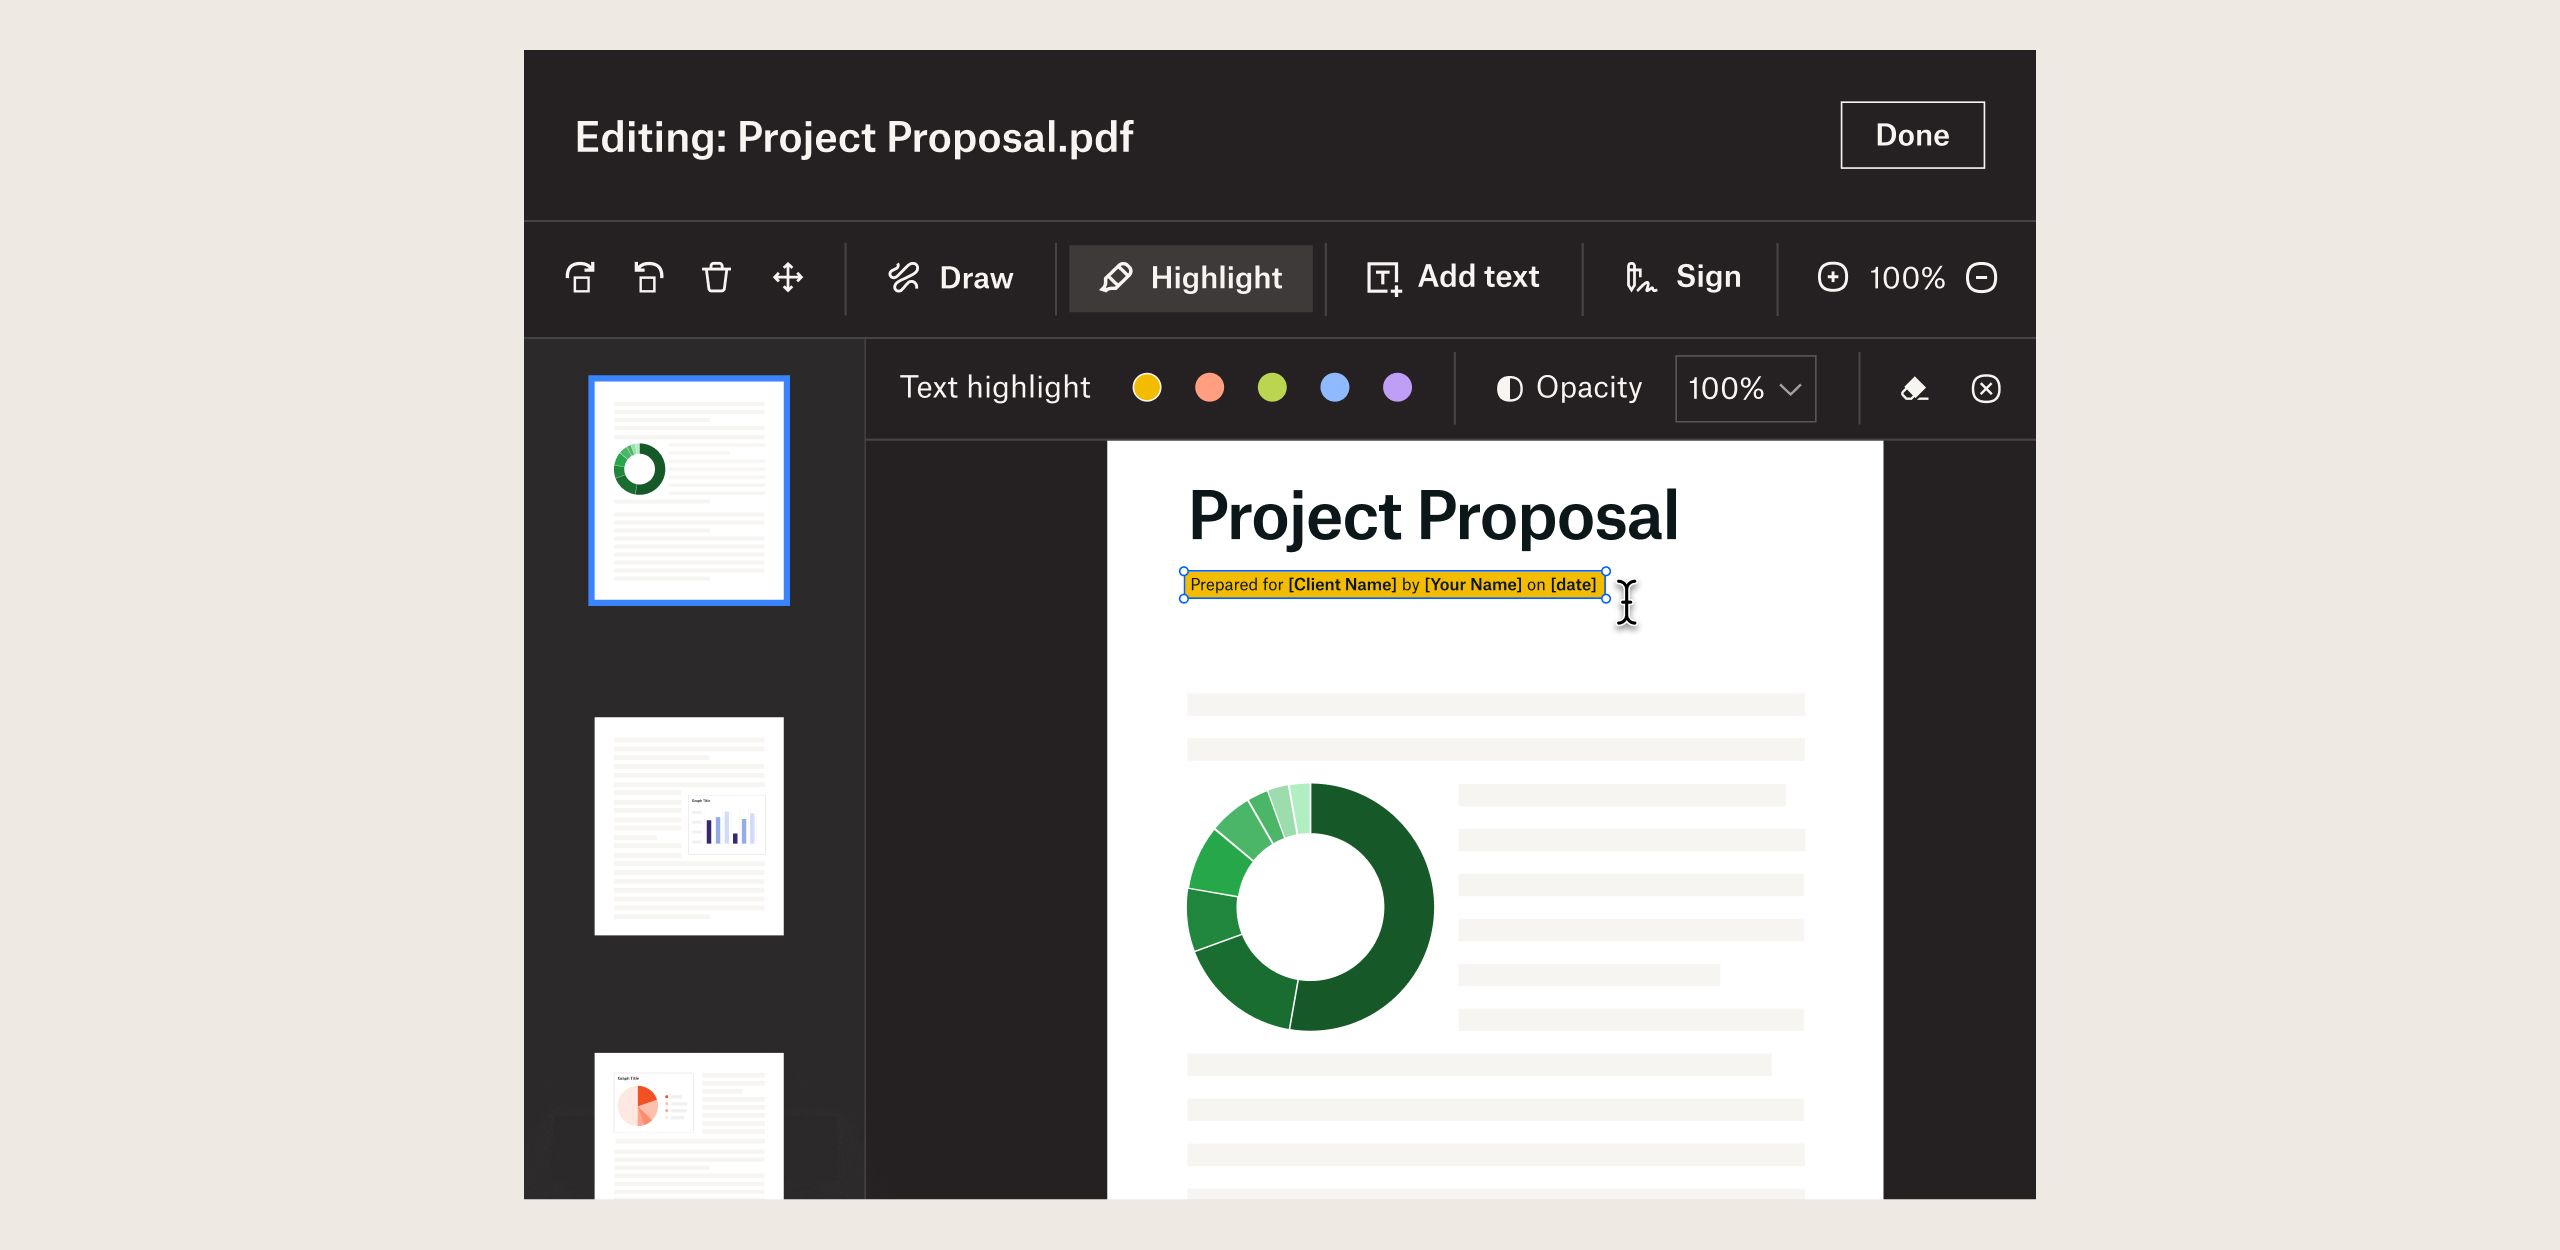 Product UI shows PDF editing capabilities